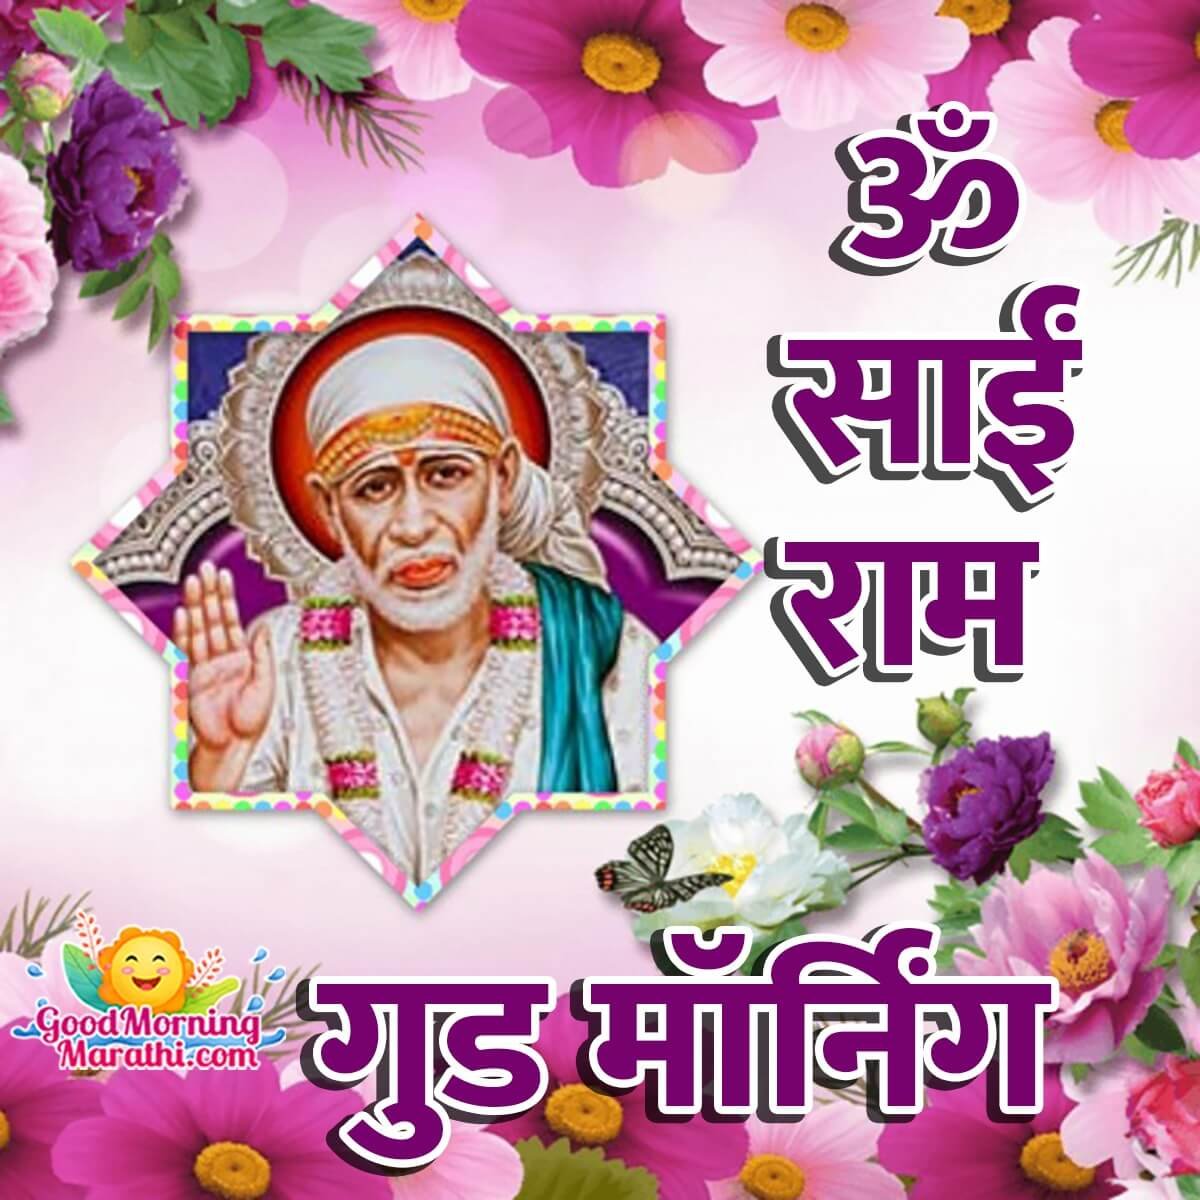 Good Morning Sai Baba Images In Marathi - Good Morning Wishes ...